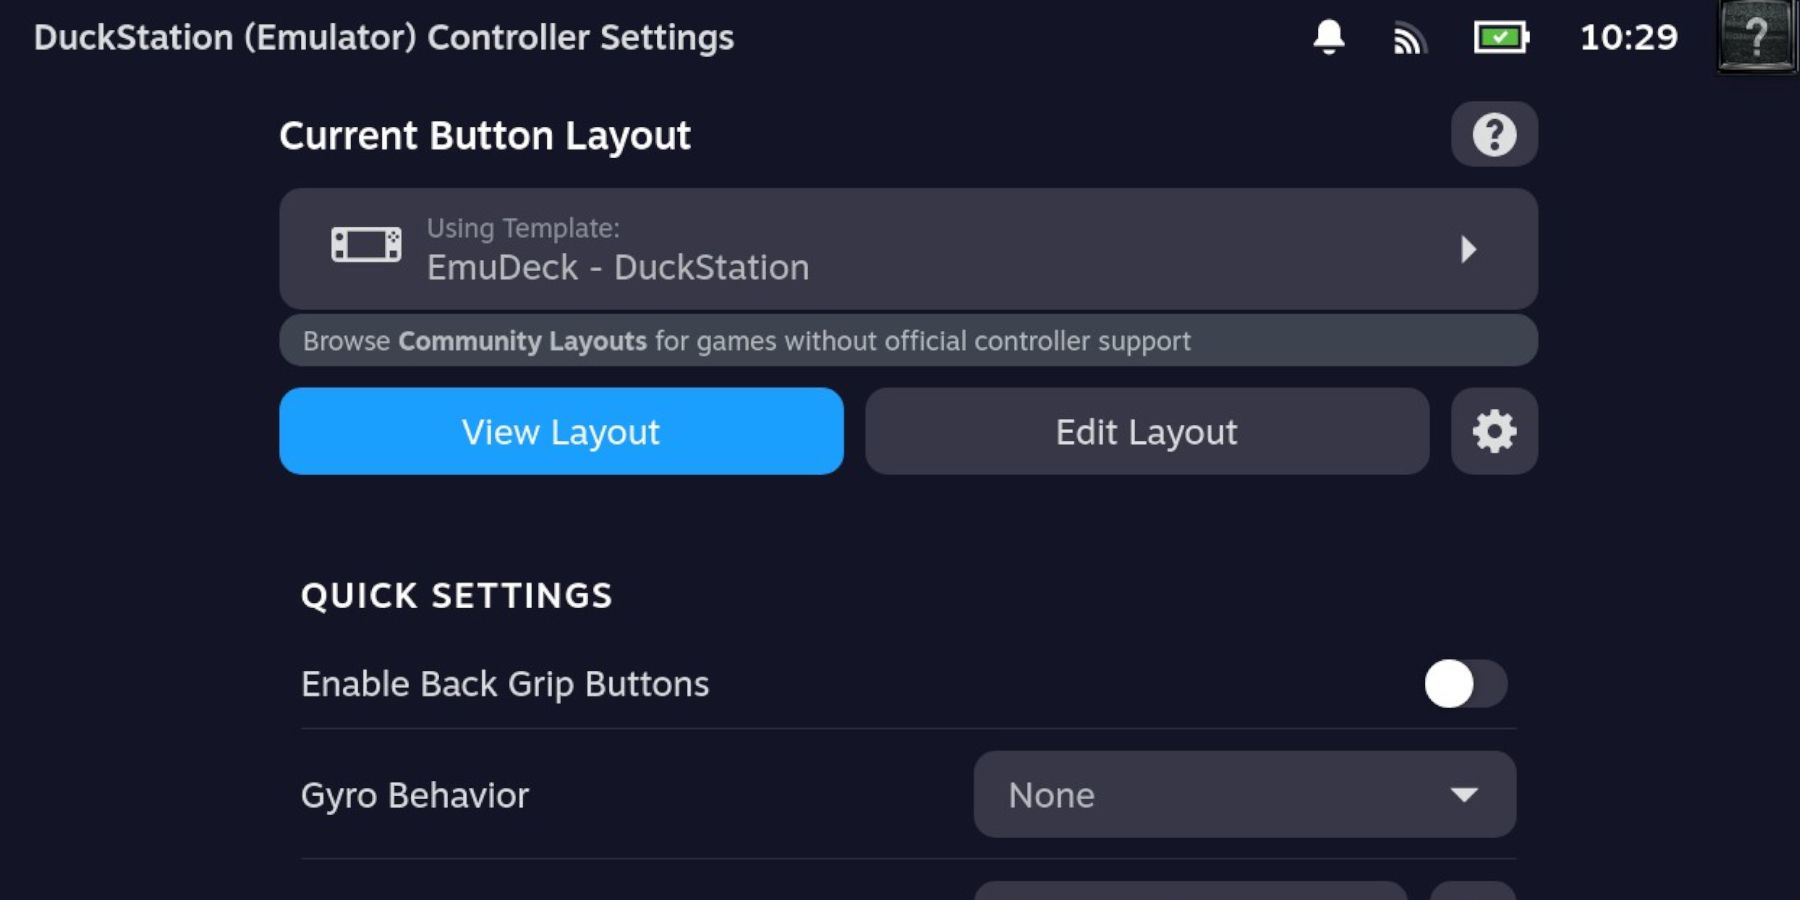 Emudeck DuckStation controls